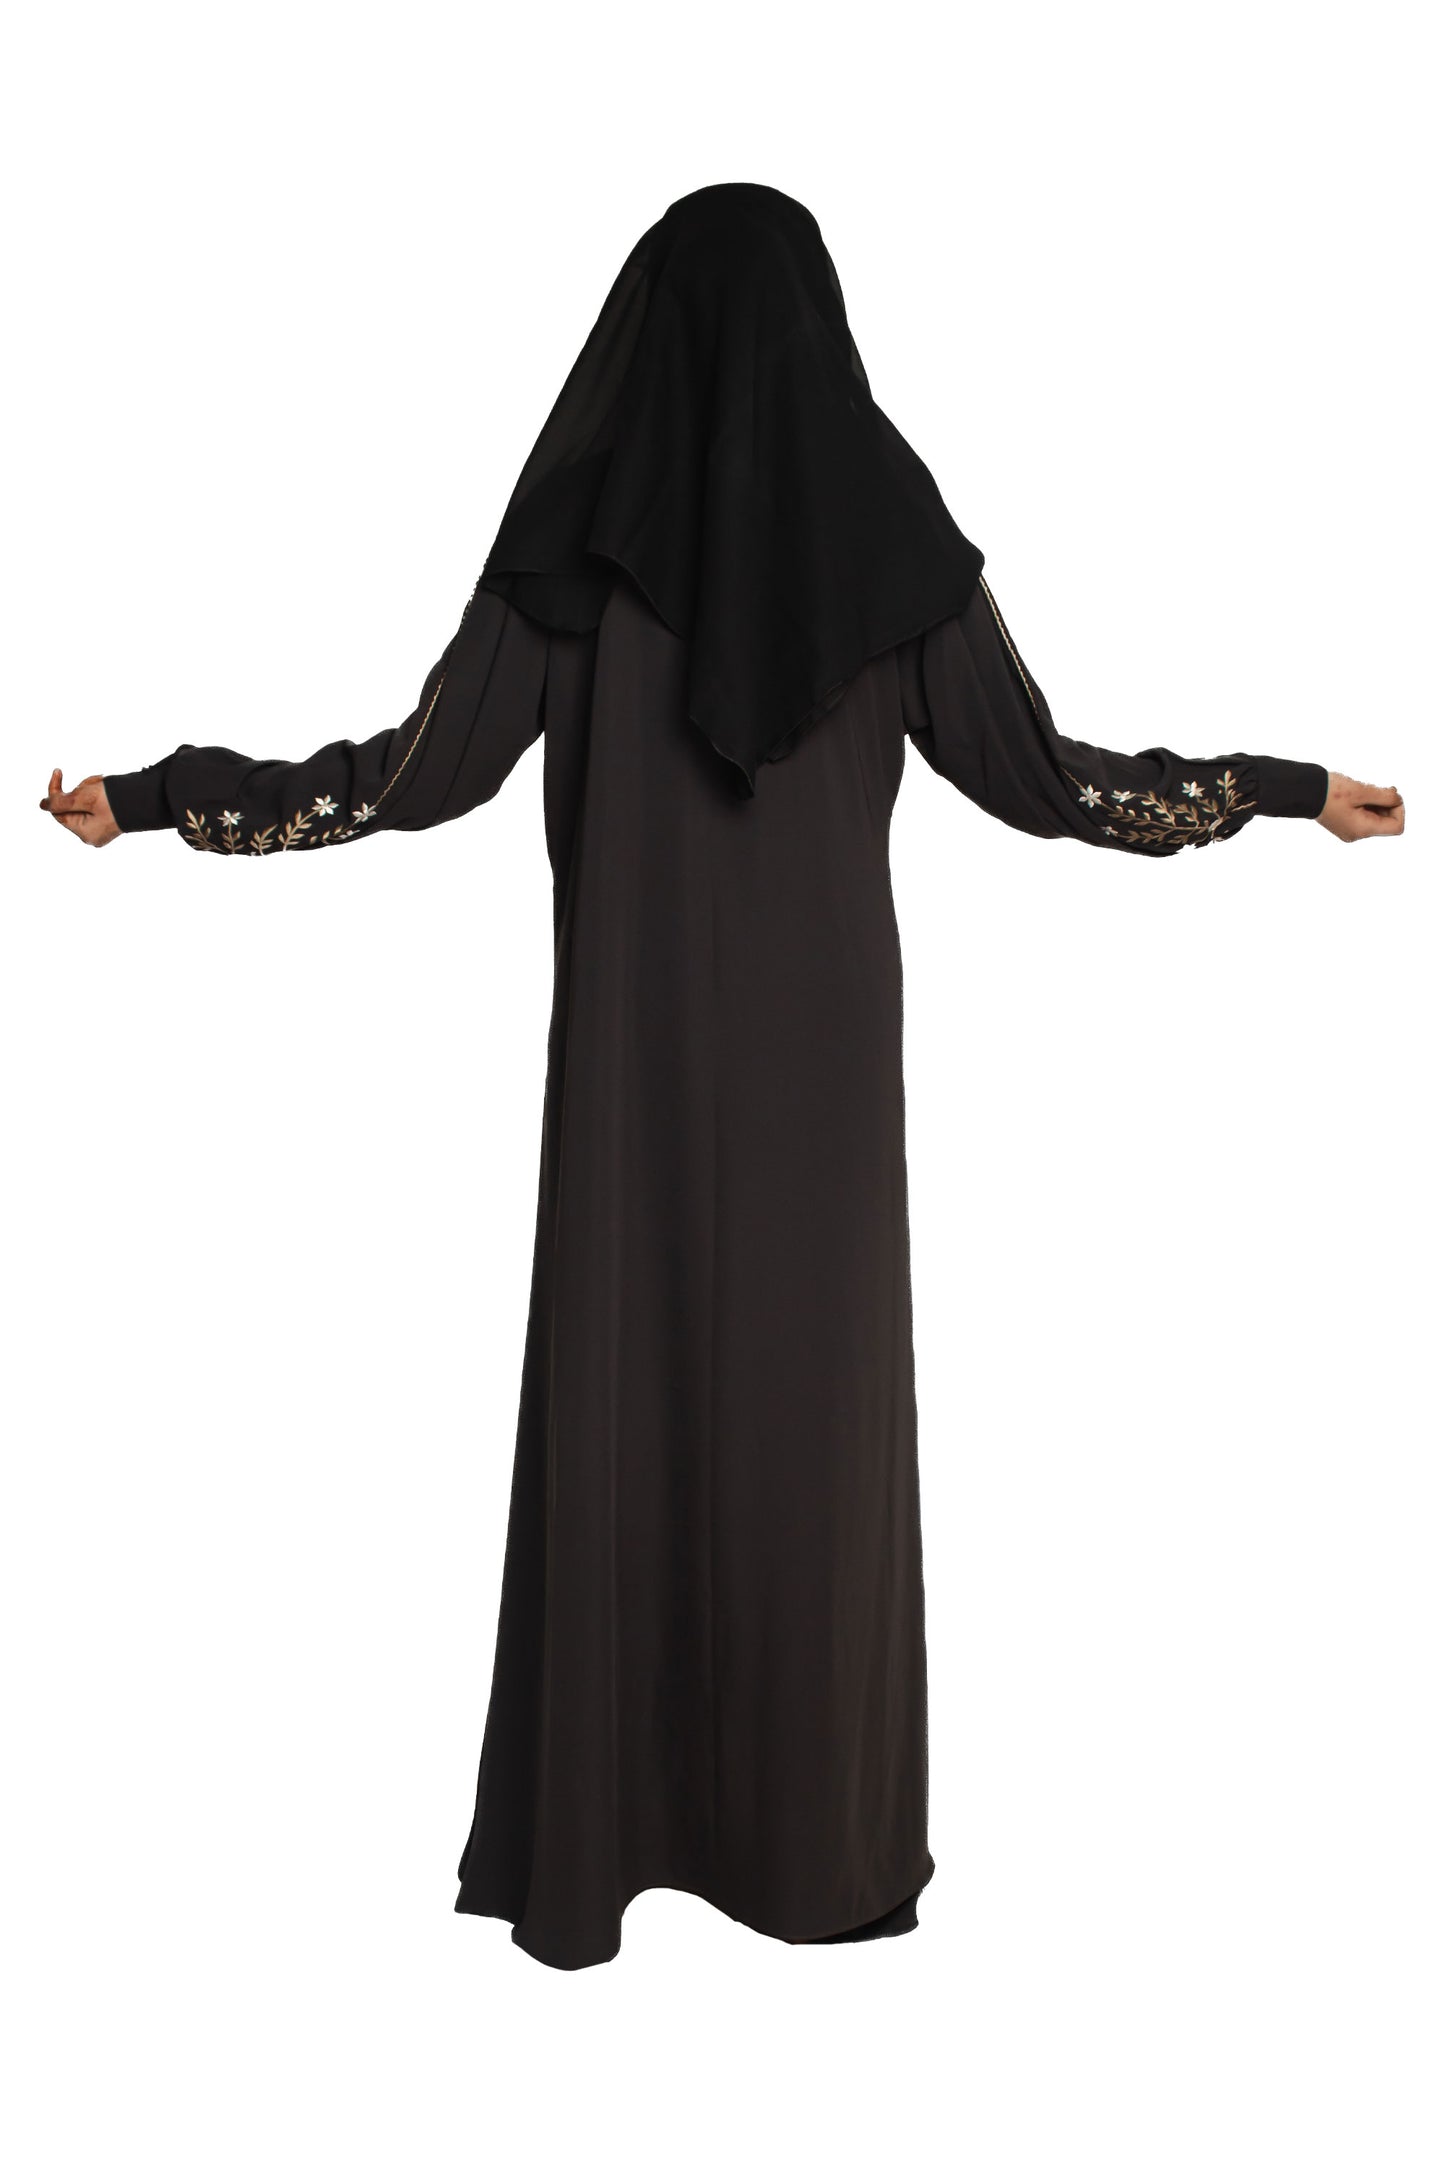 Modest City Beautiful Self Design Gala Embroidery Crepe Fabric Black Abaya or Burqa With Hijab for Women & Girls Series Laiba